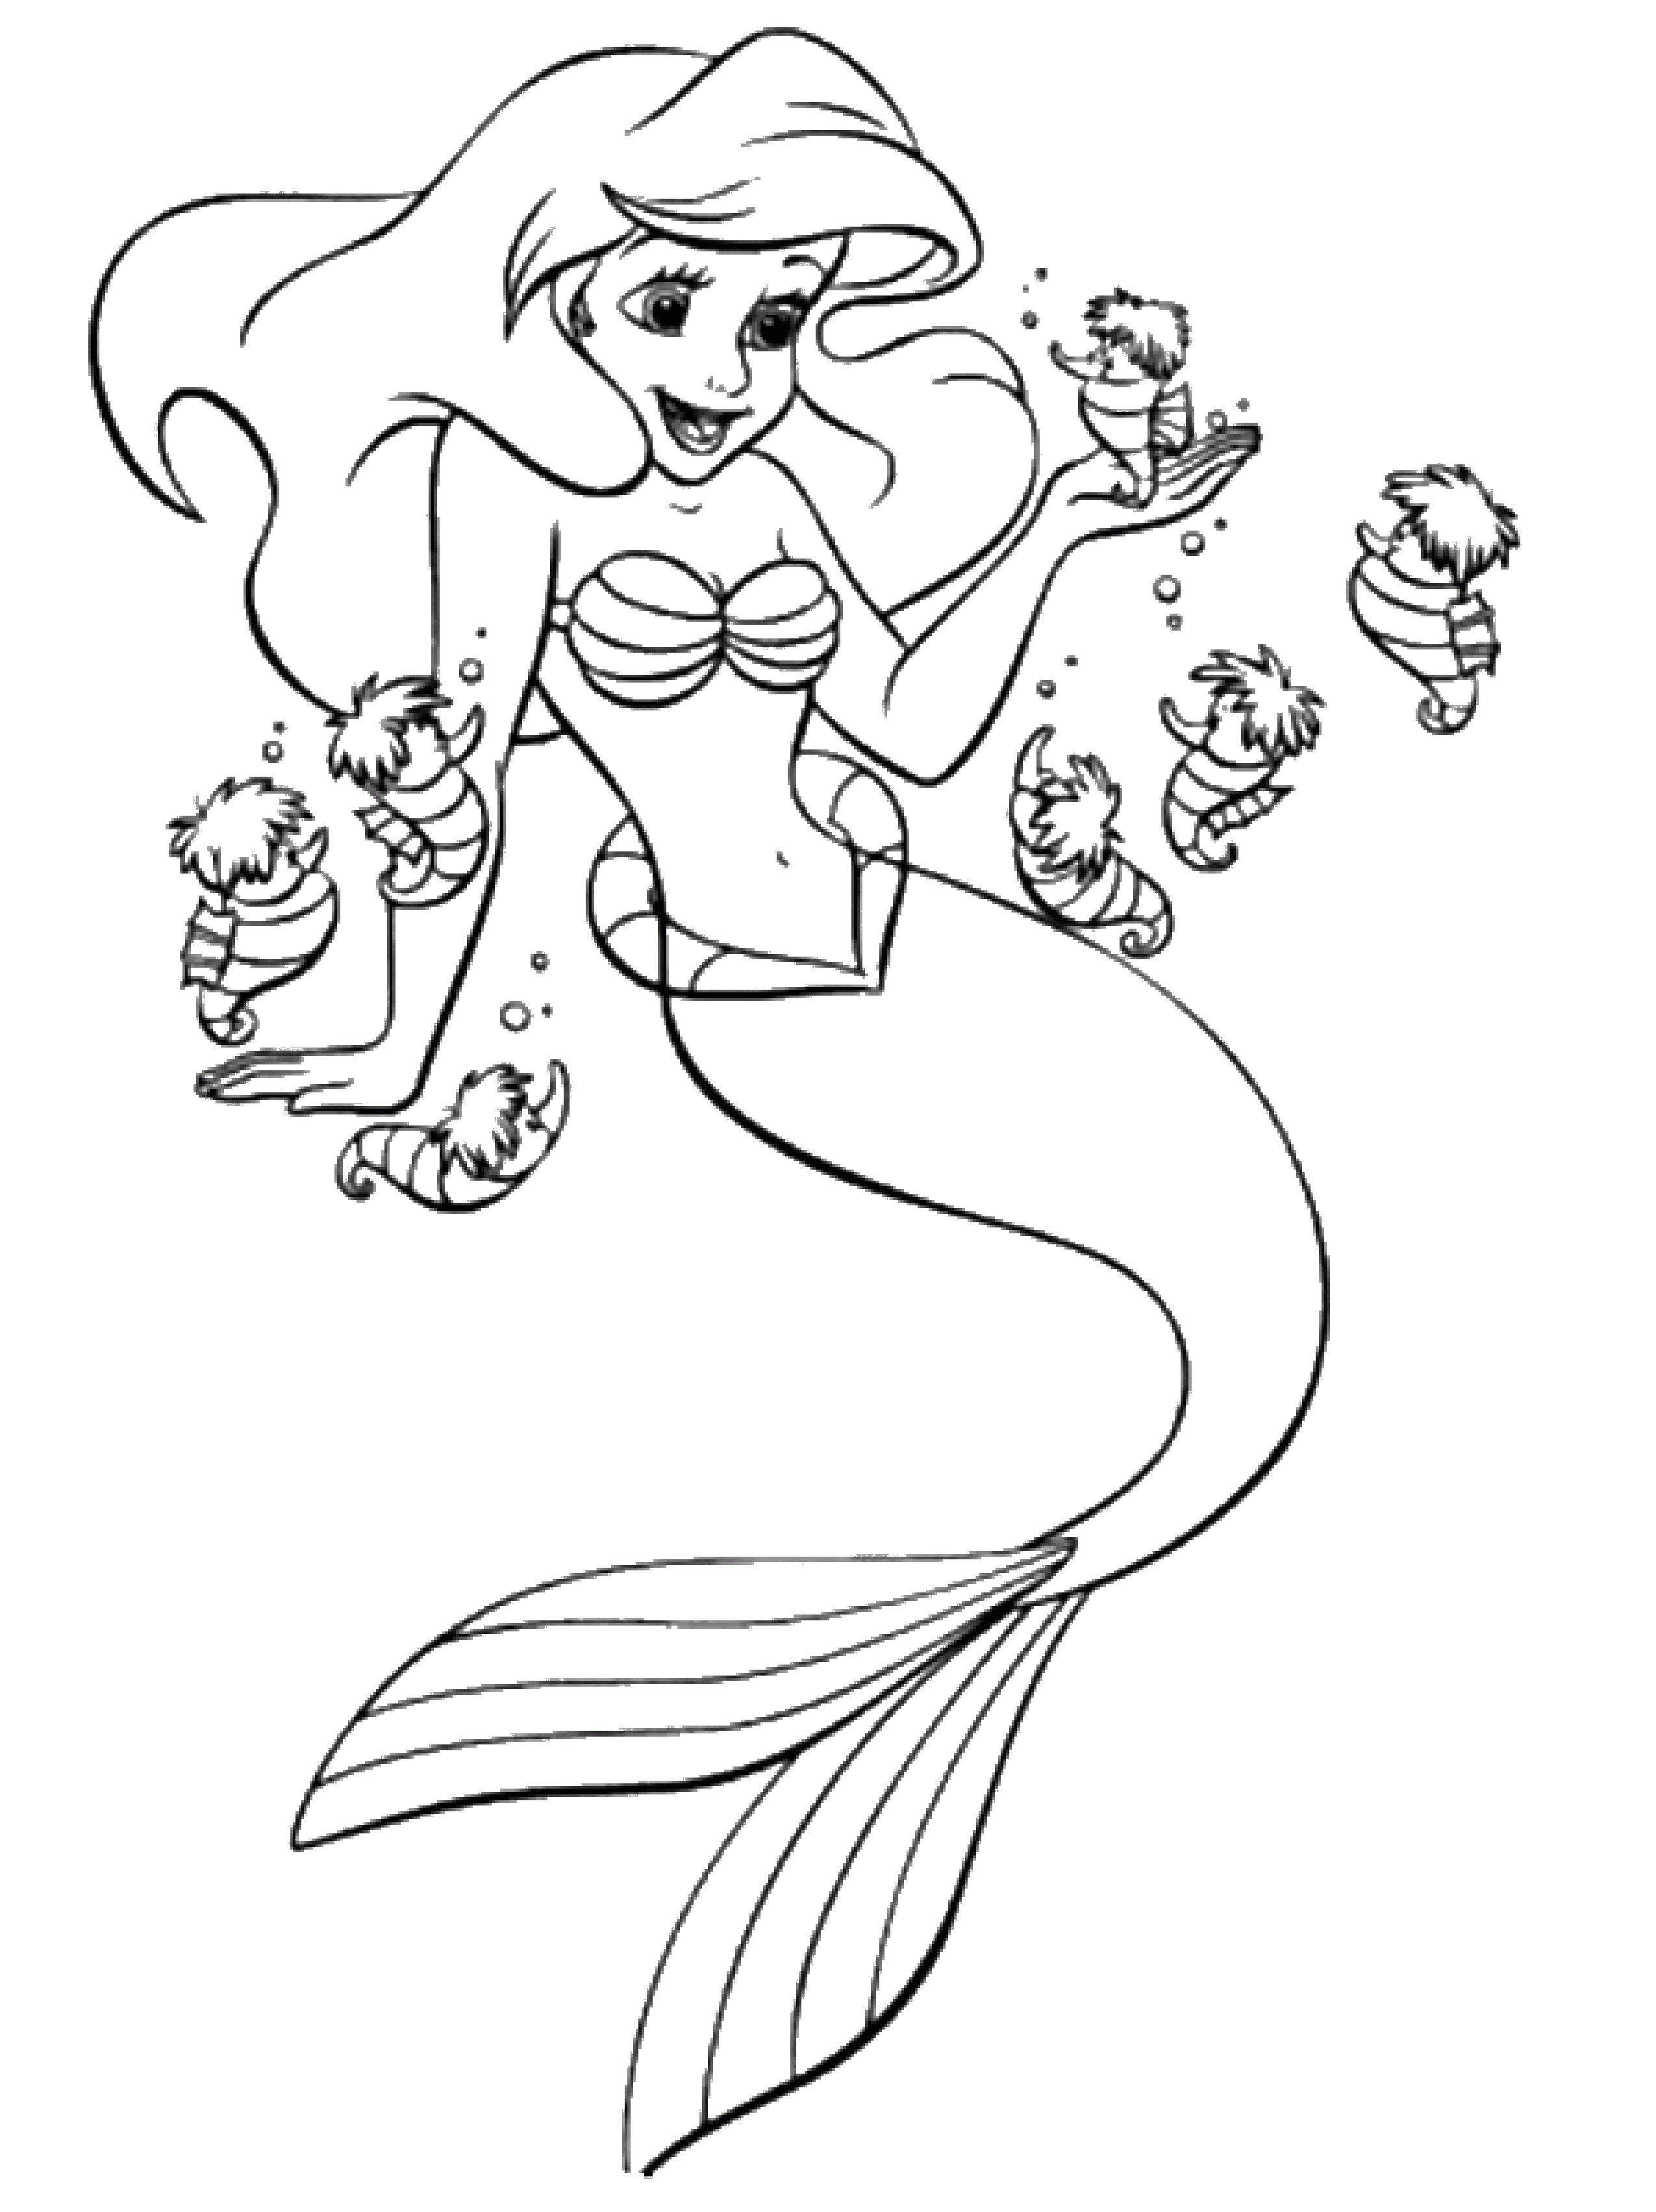 Название: Раскраска Ариэль и рыбка флаундер. Категория: Русалочка. Теги: Ариэль, русалка.